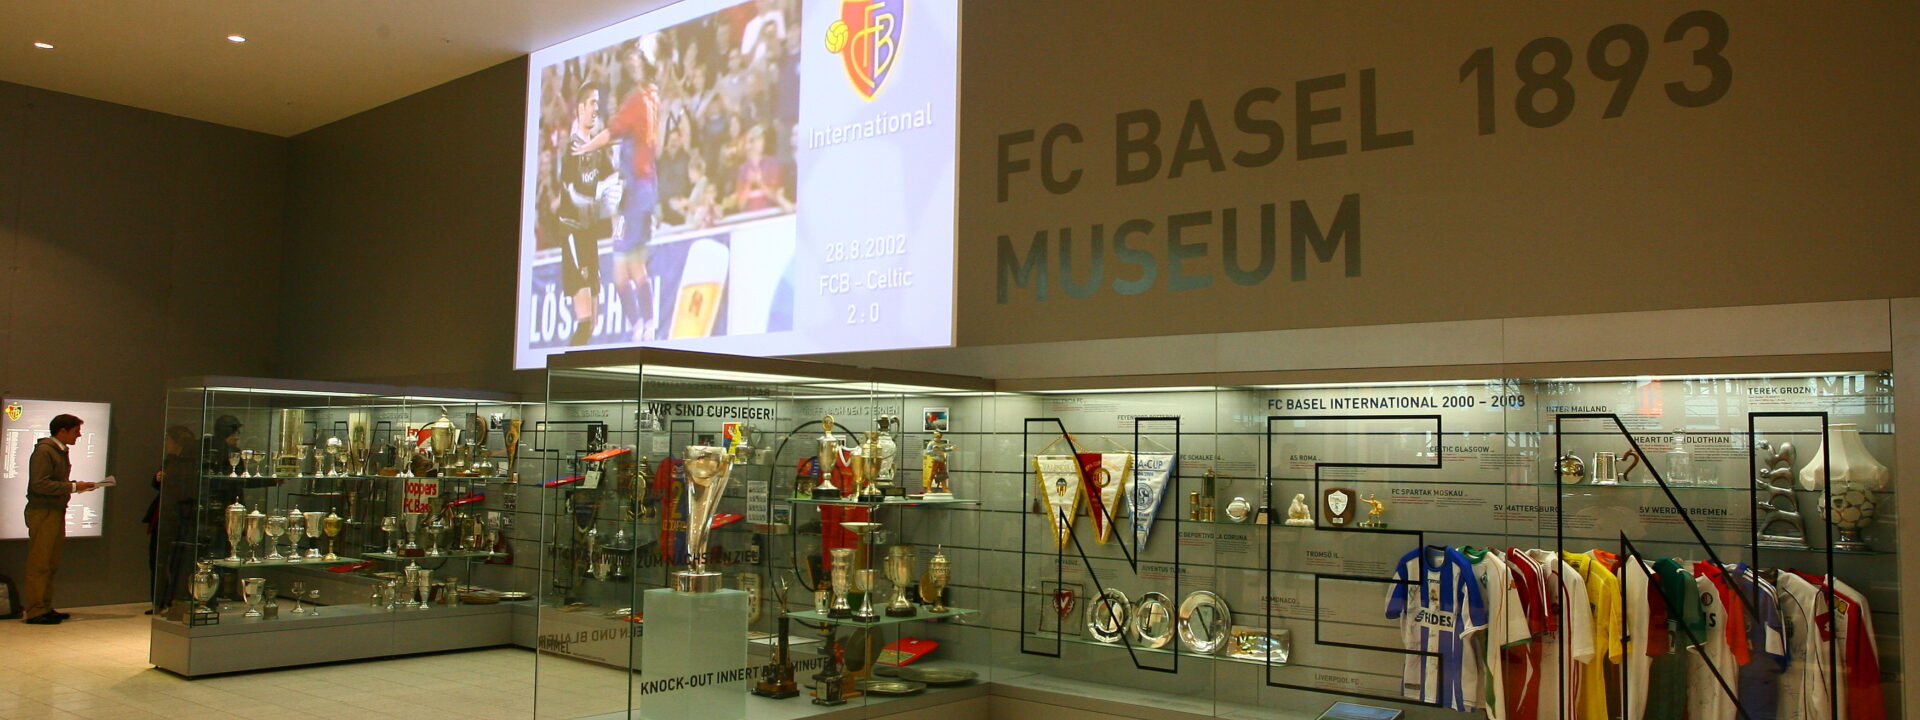 Museum FC Basel 1893